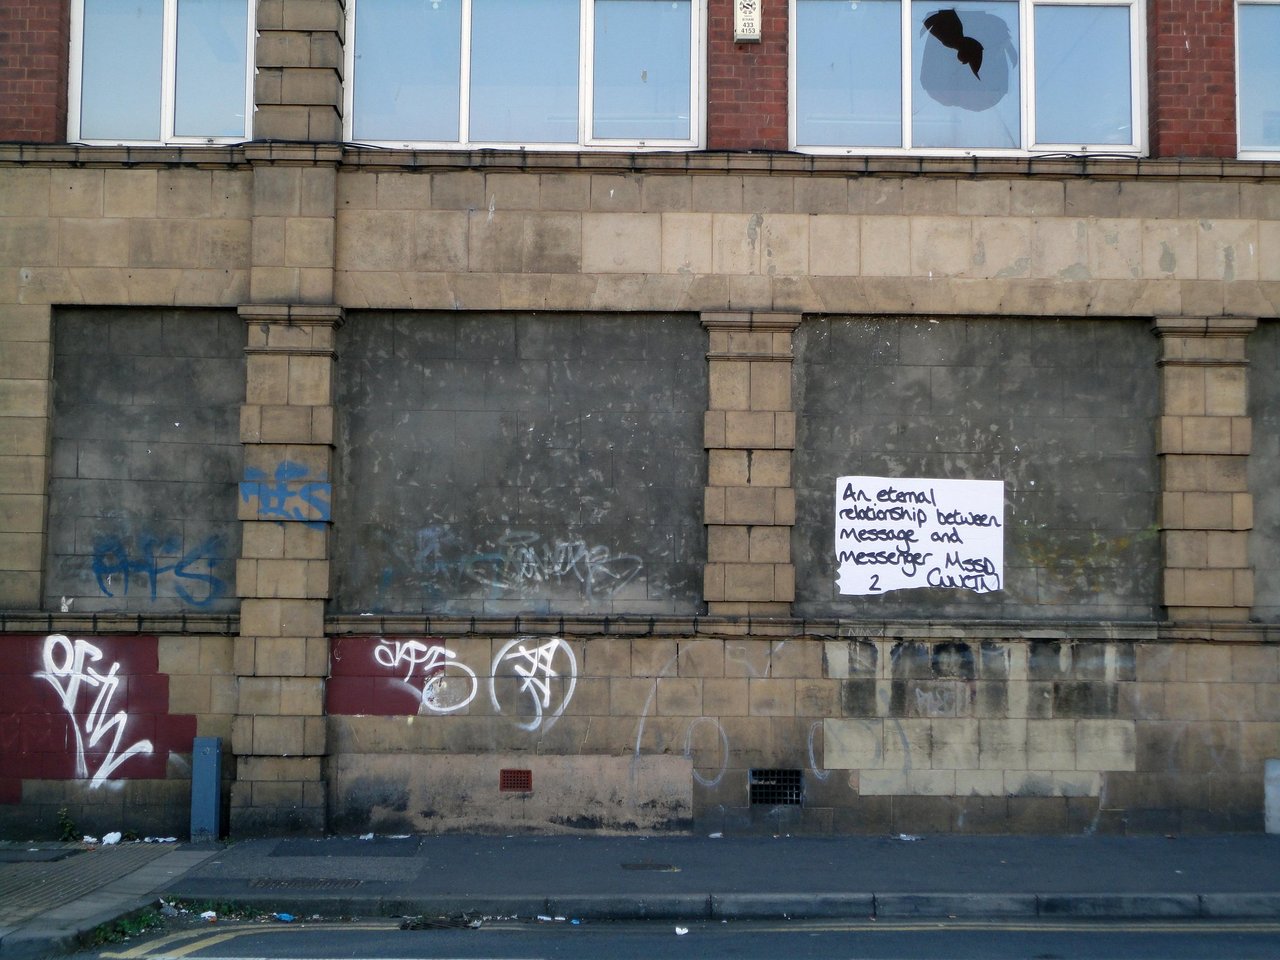 MSSDCNNCTN still breaking my damned heart

#streetart #art #arte #graffiti #Digbeth #melancholy http://t.co/fKFlSSPGAC